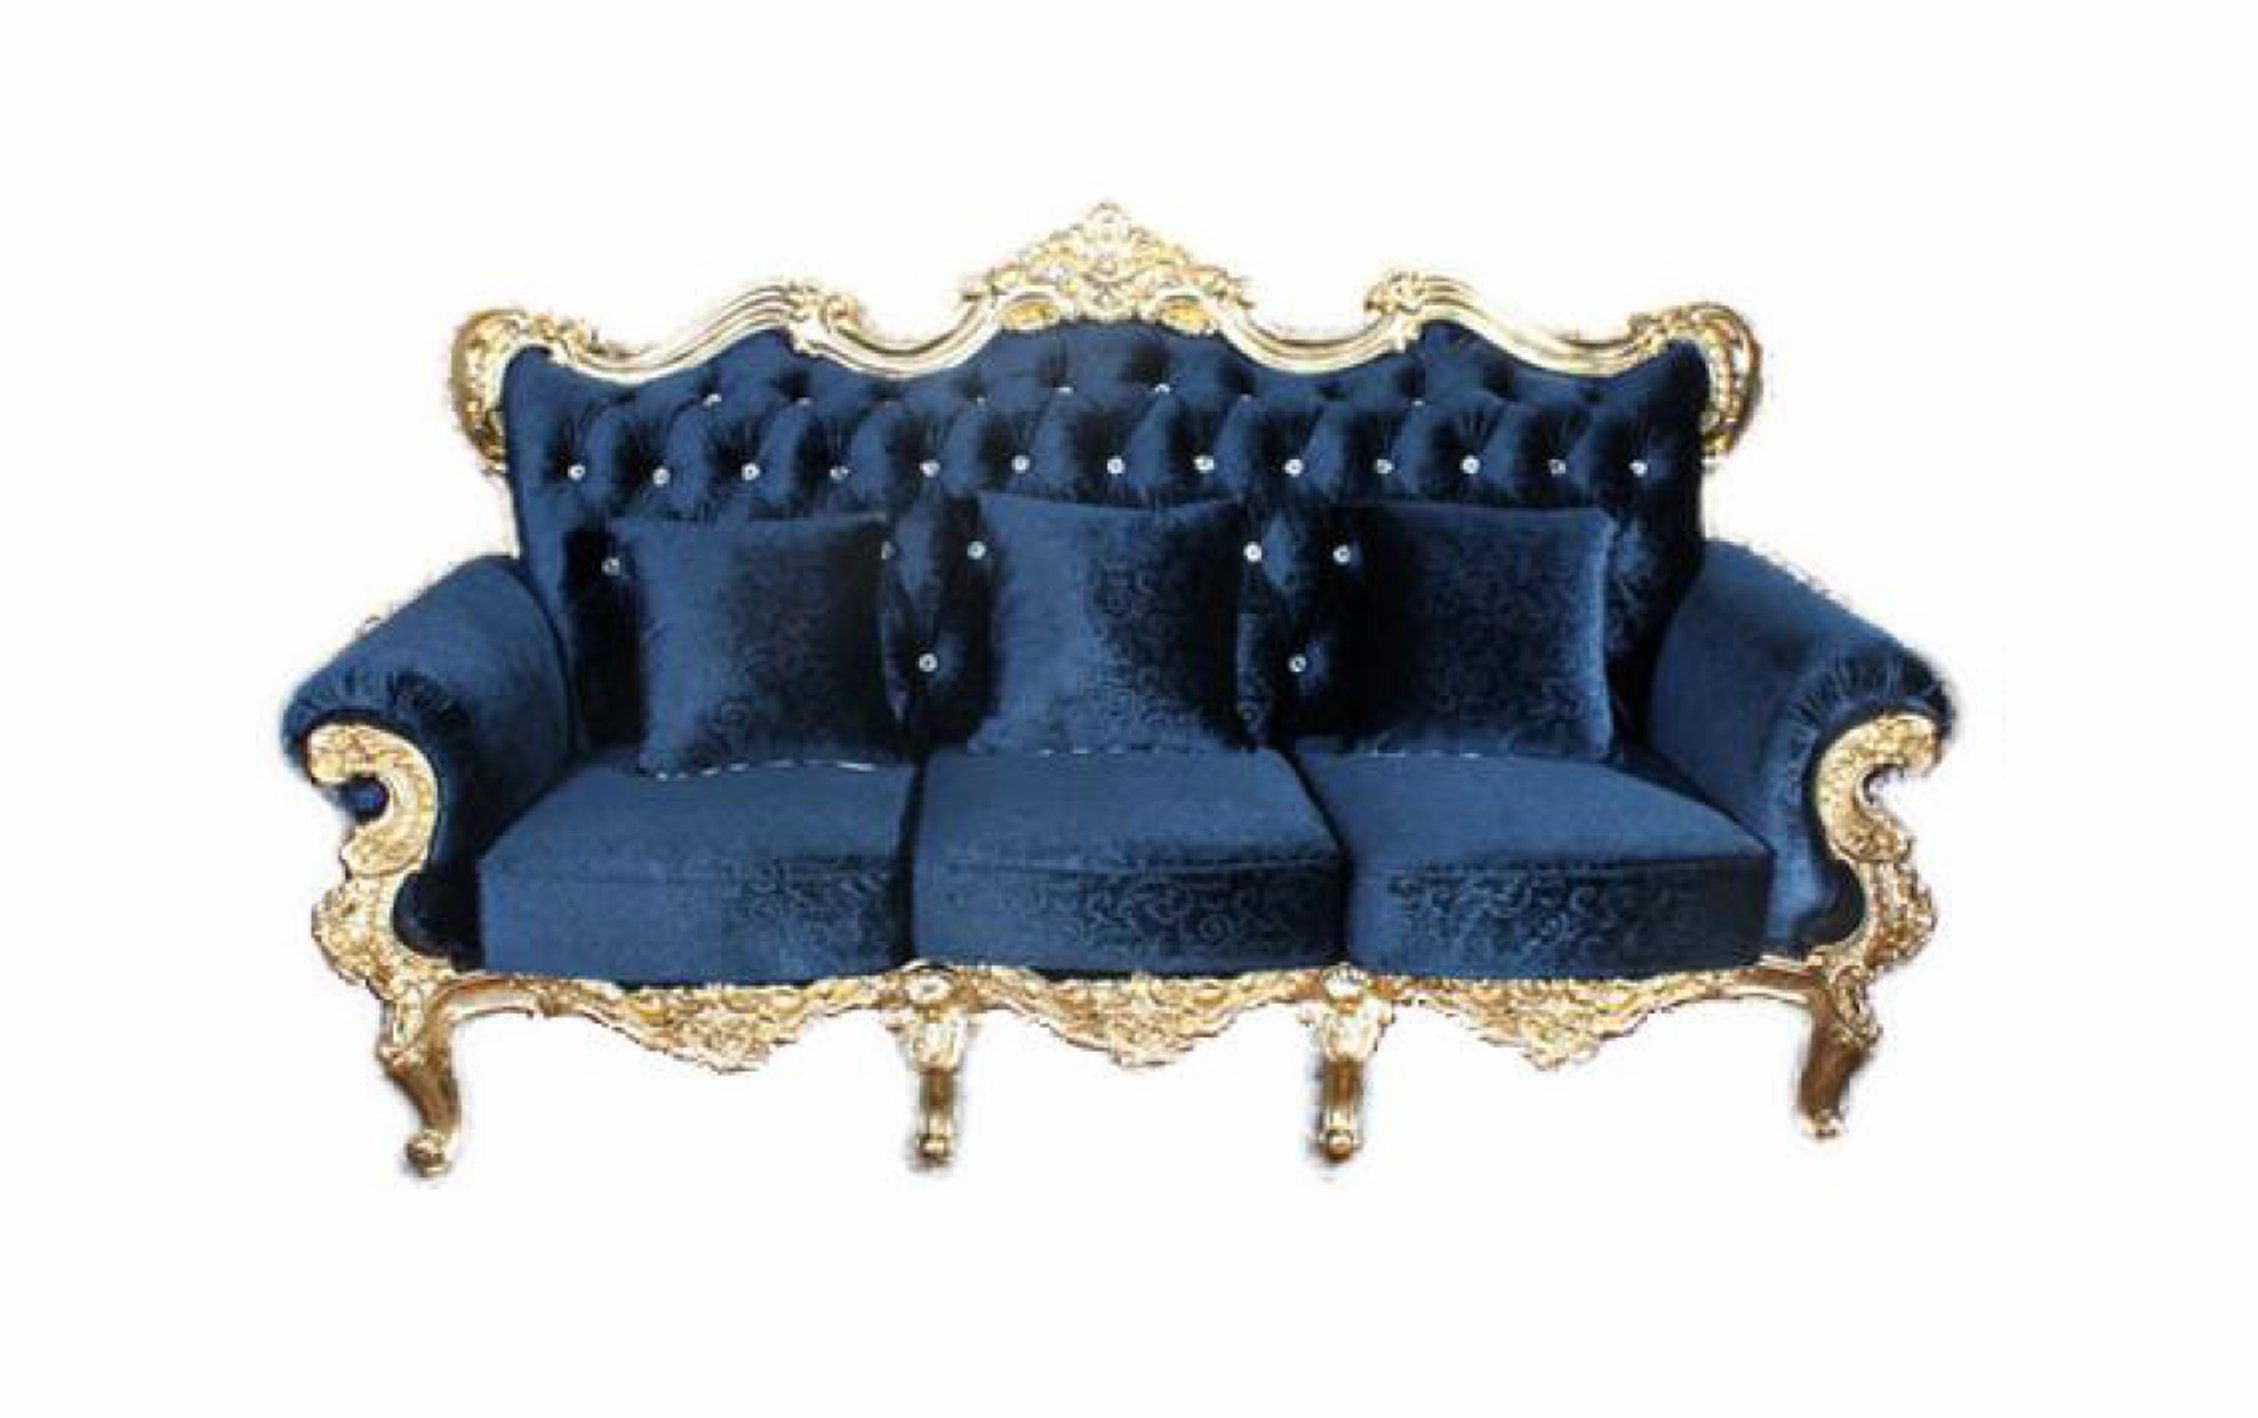 Europe Made Polstermöbel in Dreisitzer Blauer Chesterfield Luxus Sofa Design, JVmoebel Klassischer